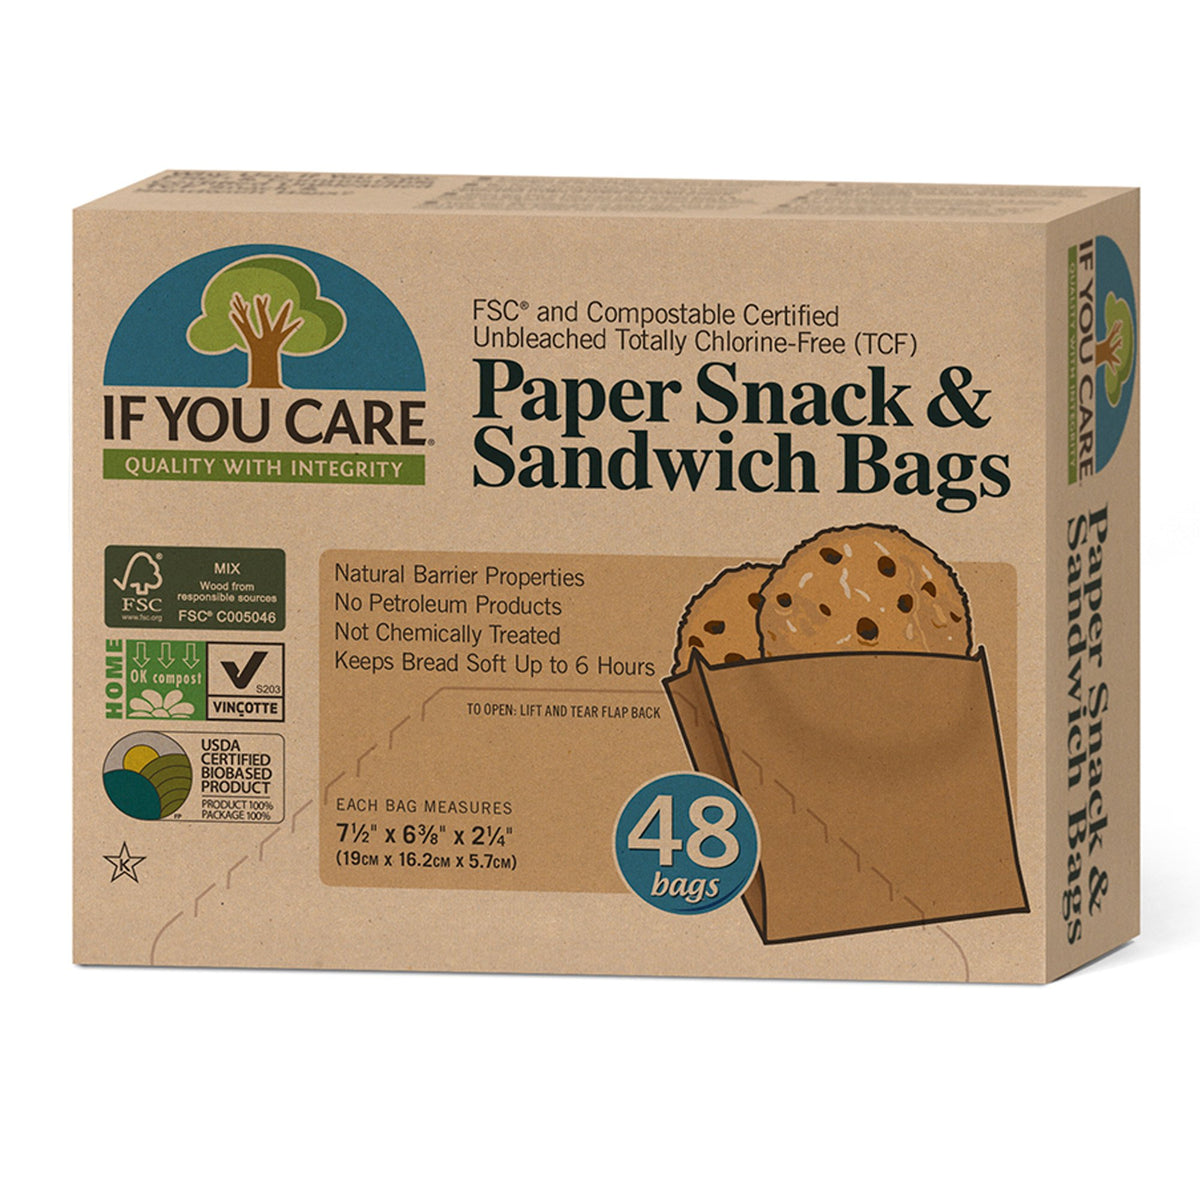 paper snack &amp; sandwich bags in package, 48 bags. bag measure 19cm x 6.2cm x 5.7cm